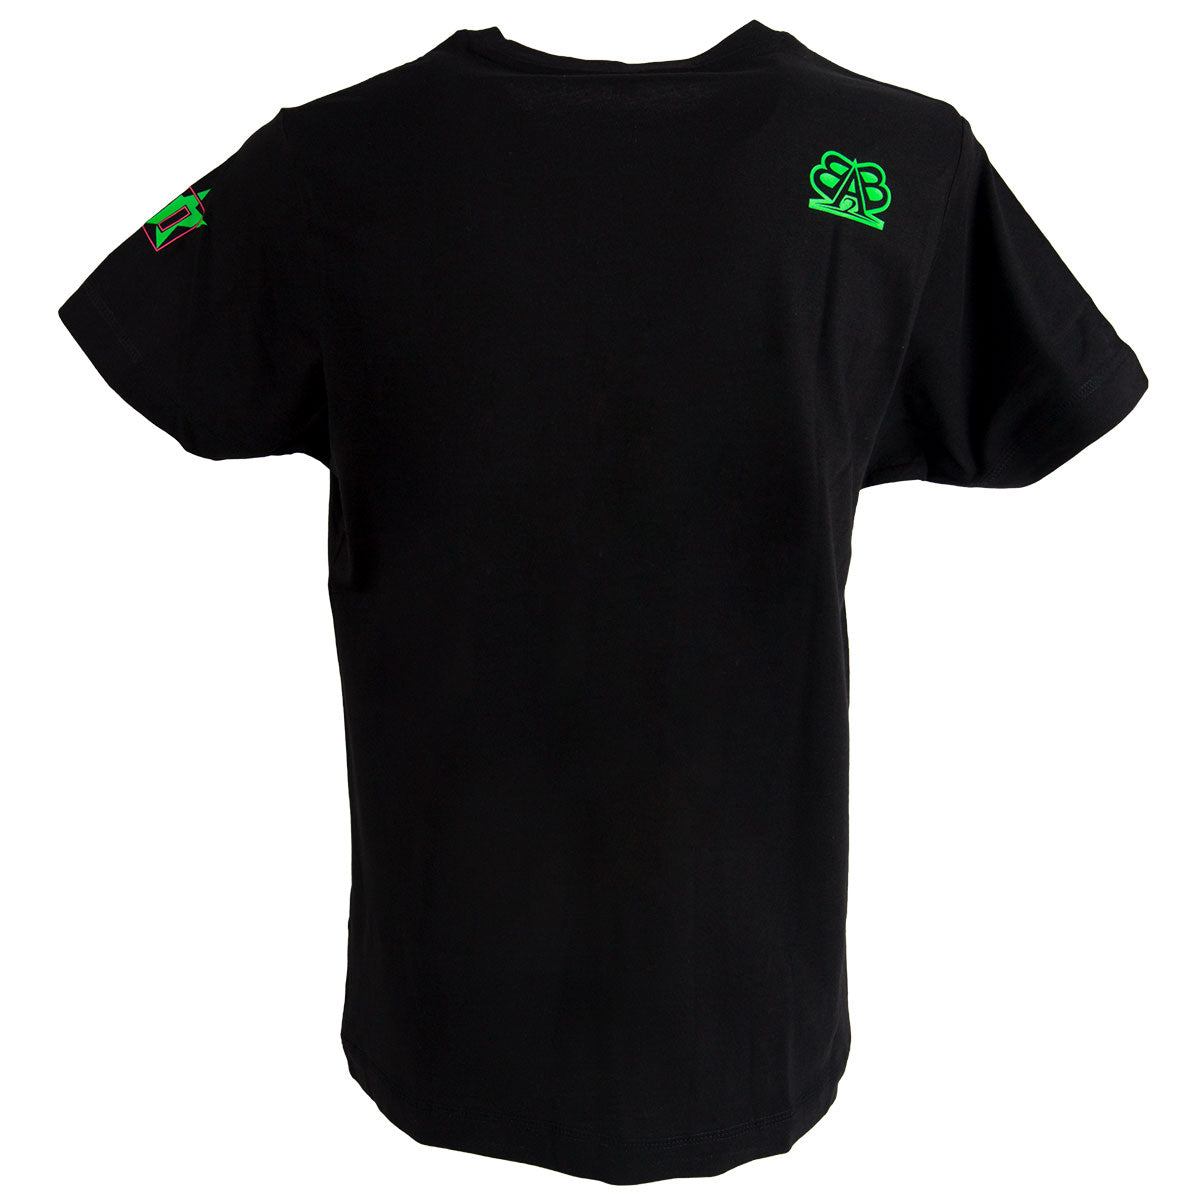 US21 T-Shirt Black - B2BA Clothing